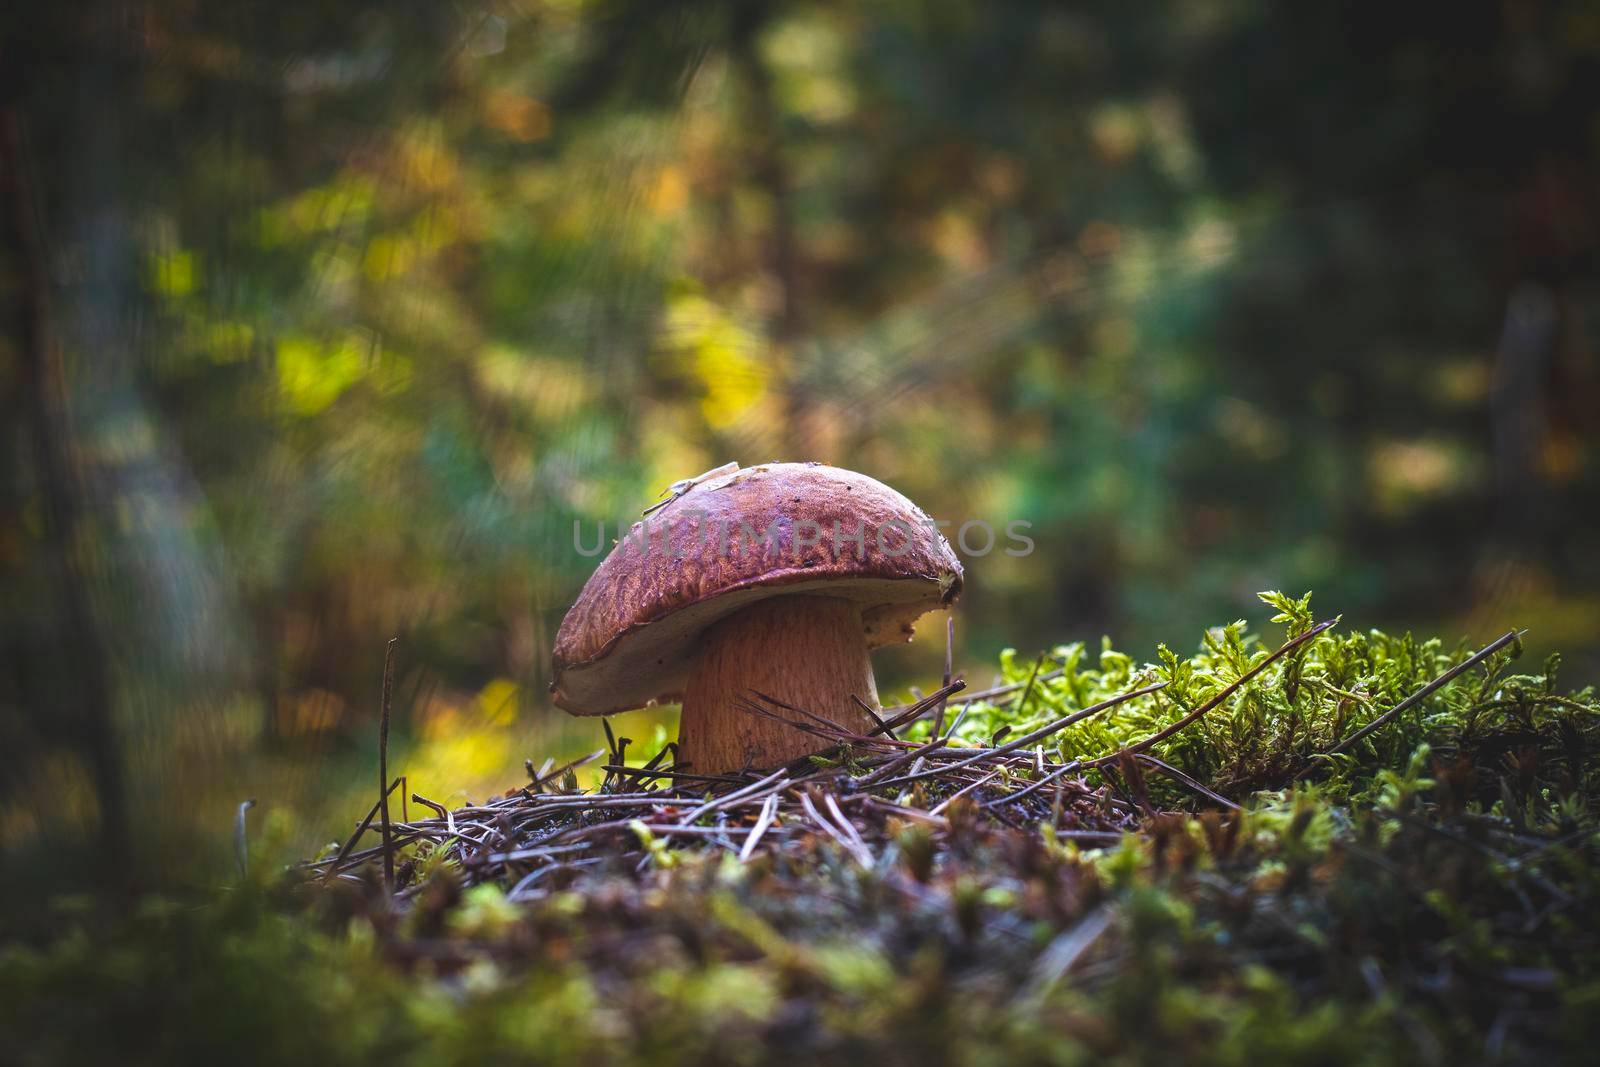 Porcini mushroom grow in autumn wood. Royal cep mushrooms food. Boletus growing in wild wood